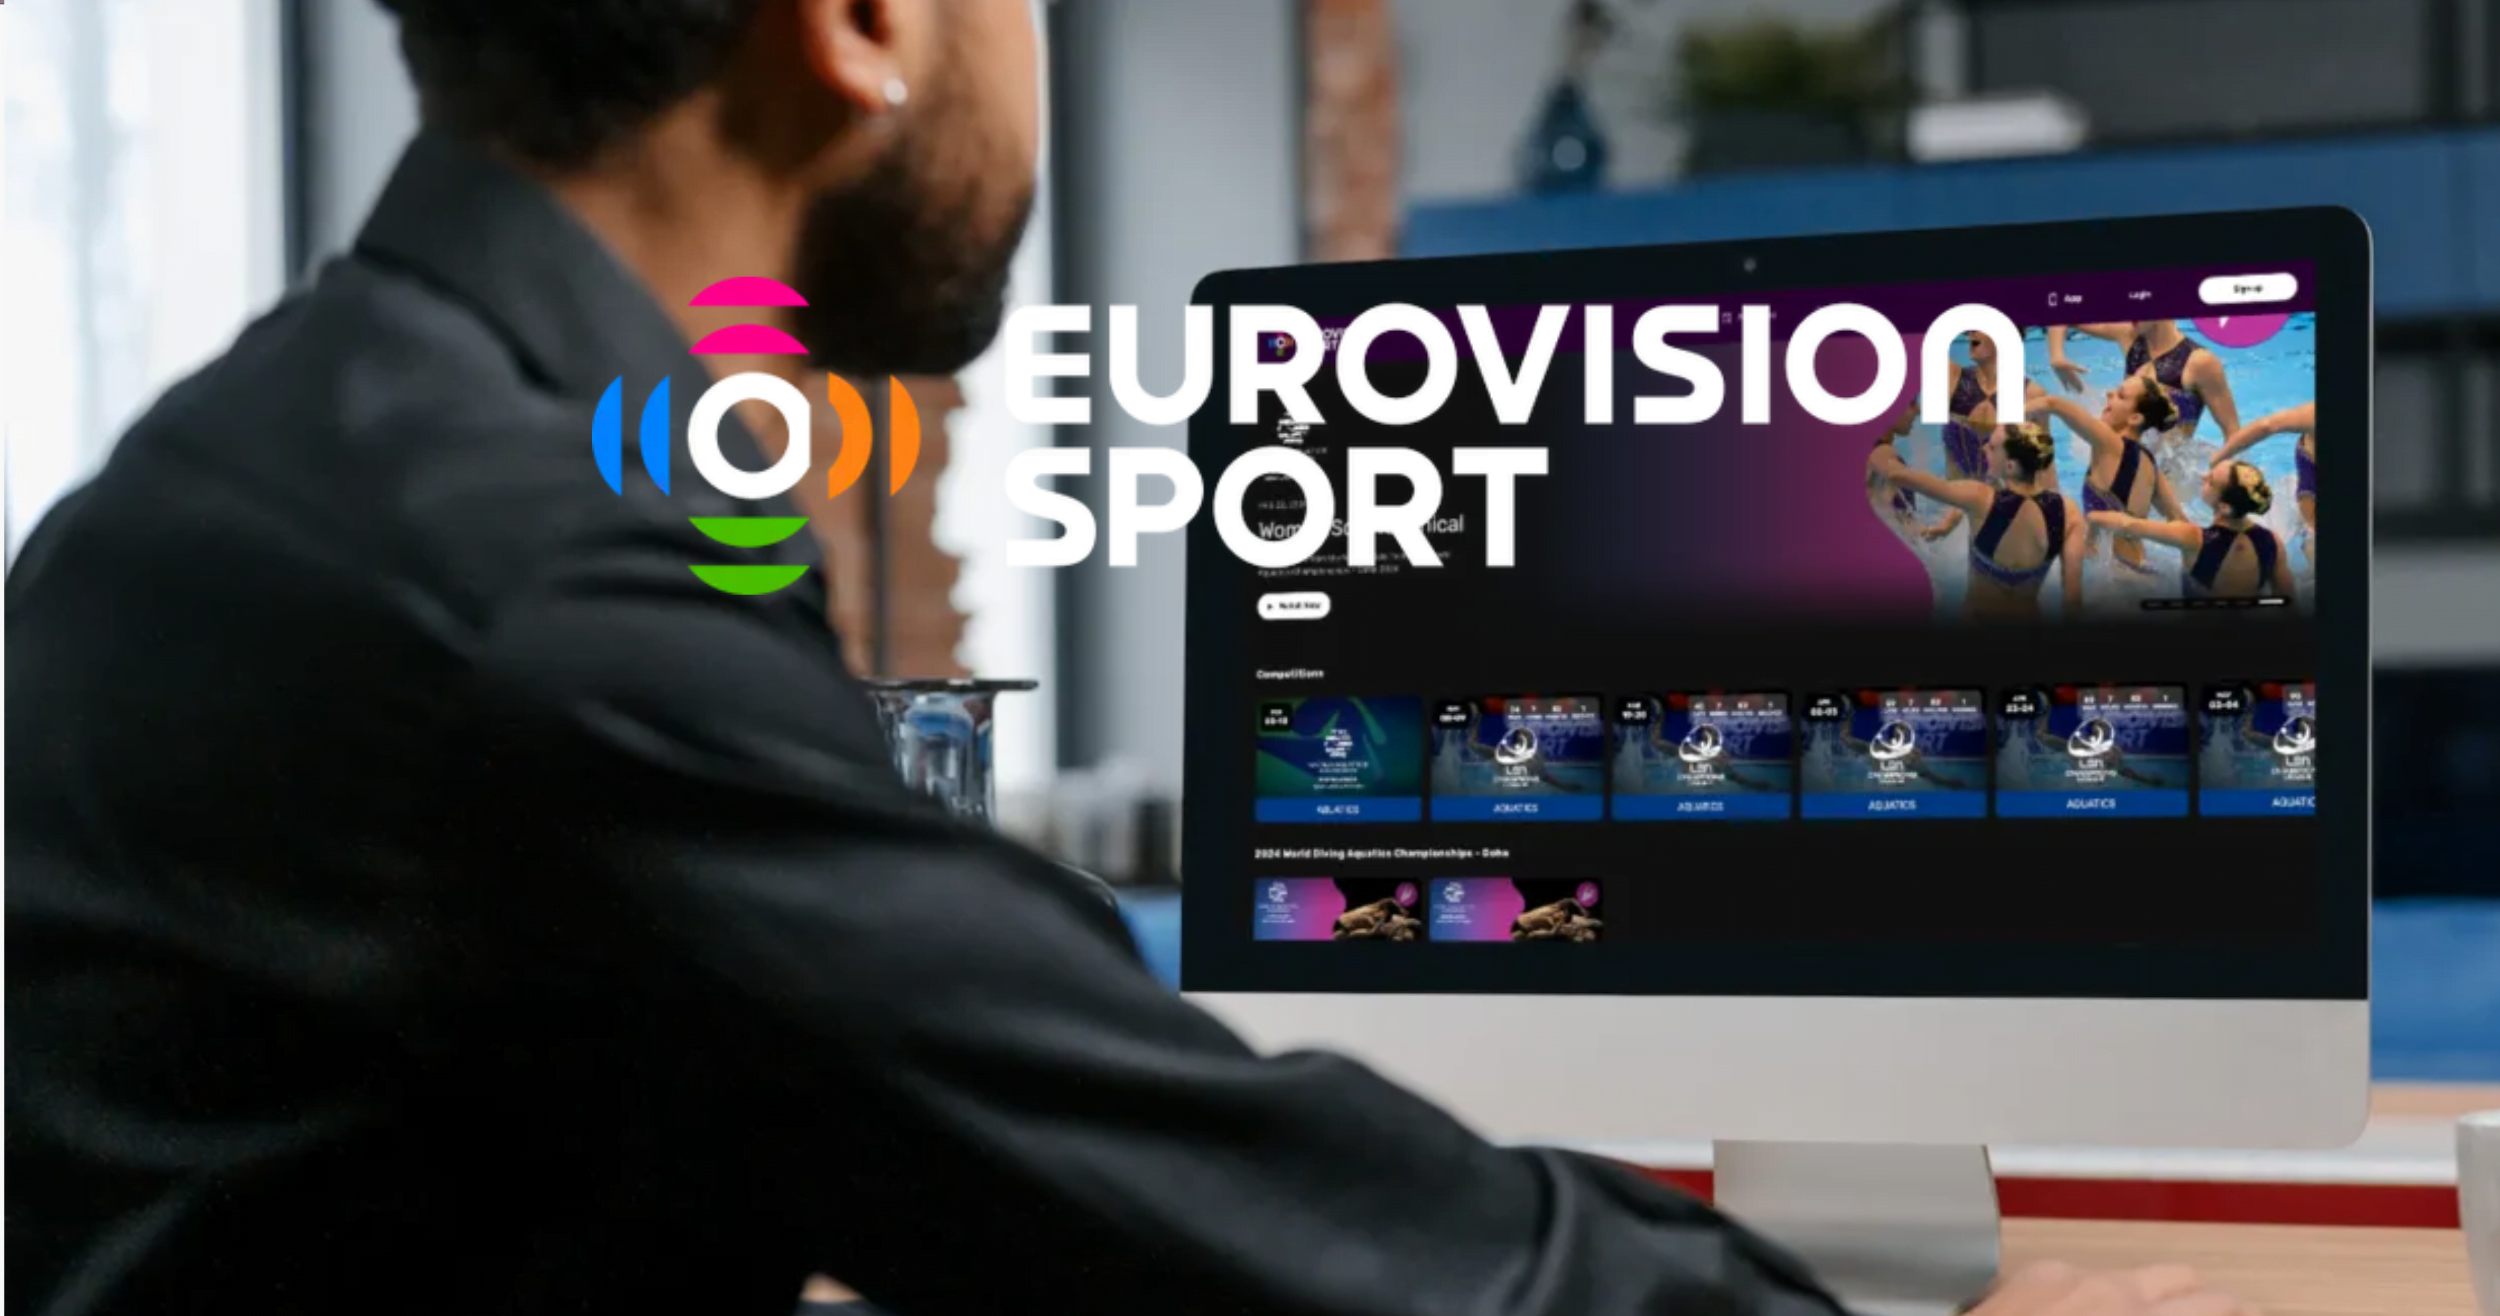 Eurovison Sport